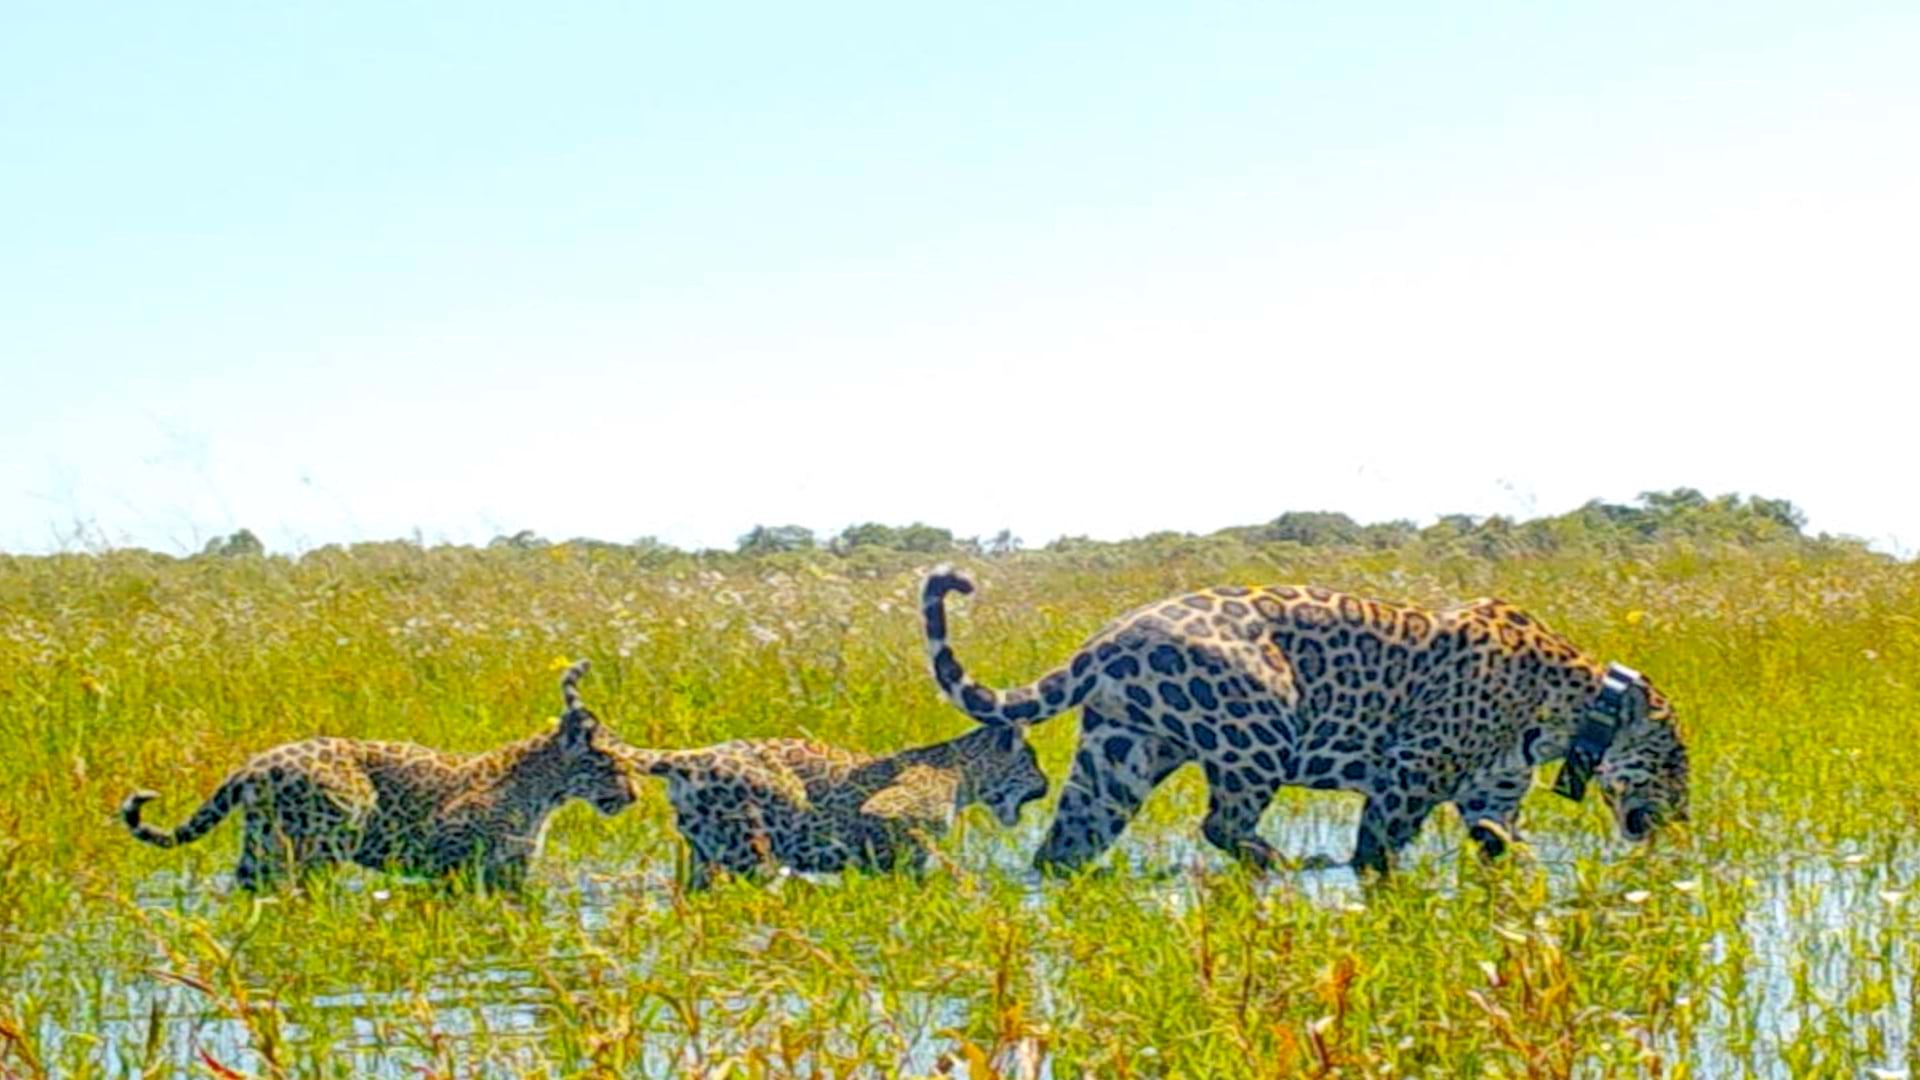 Jaguar image courtesy of Rewilding Argentina